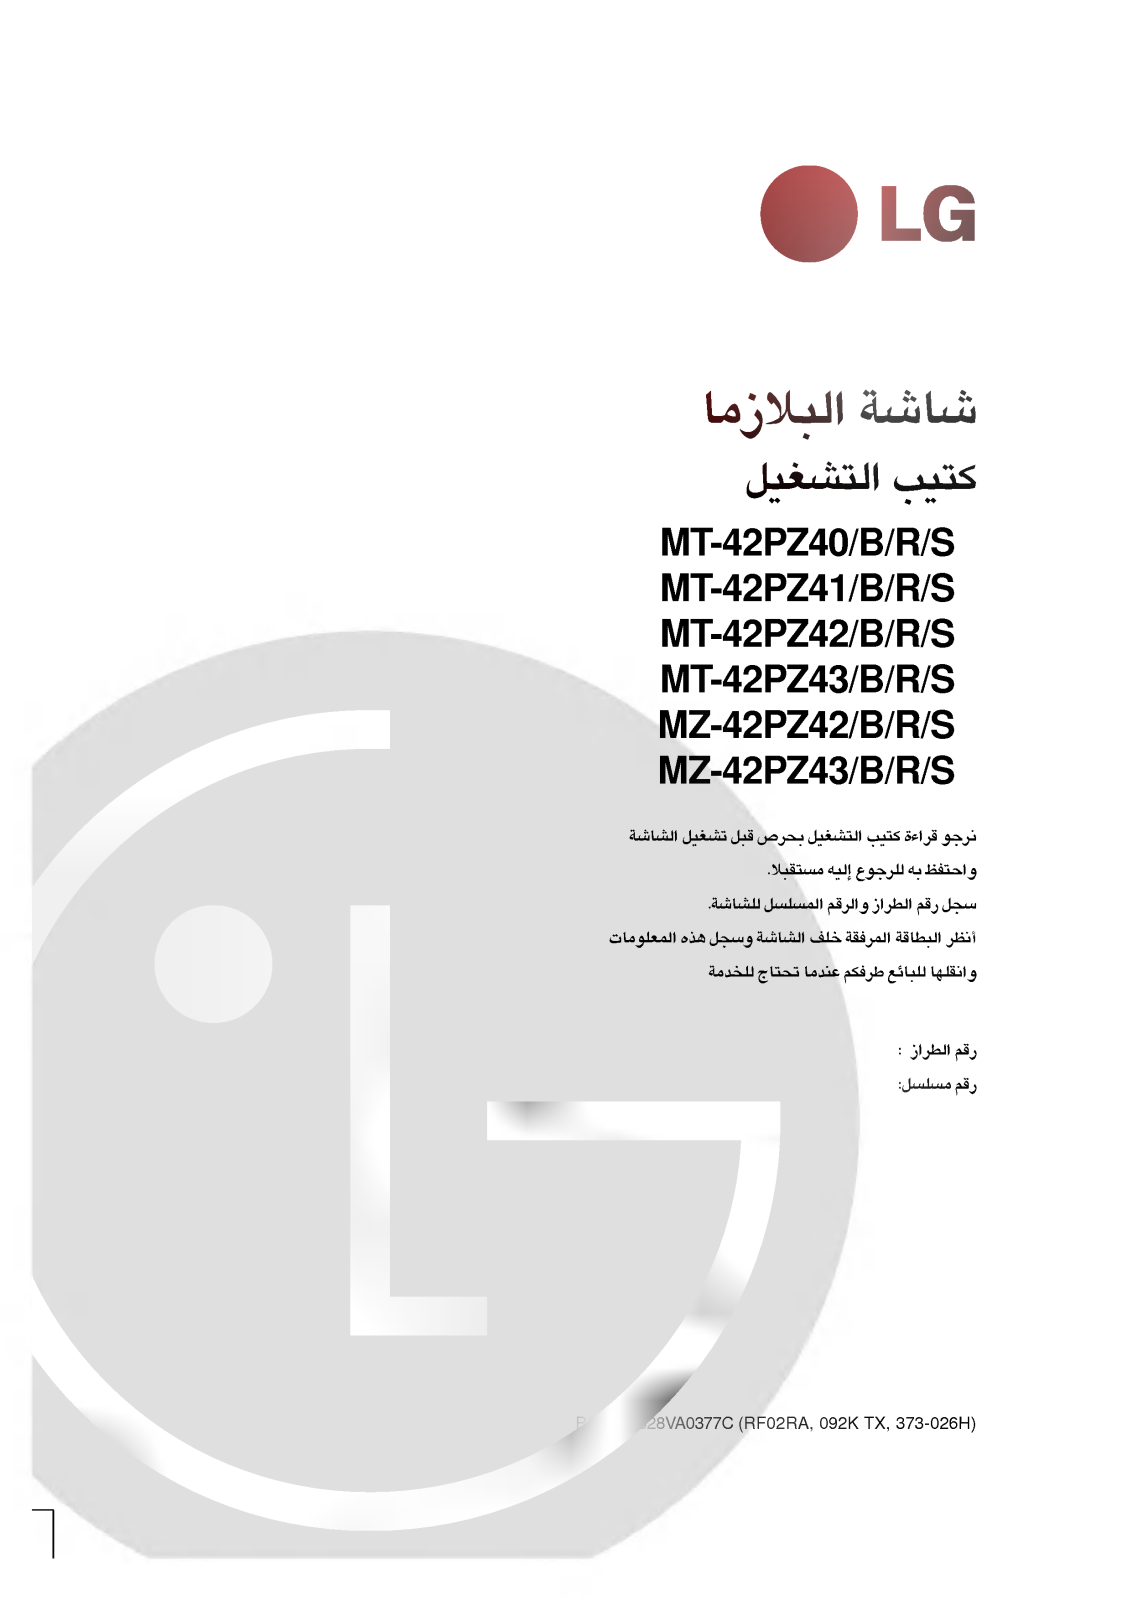 LG MT-42PZ41 Owner’s Manual